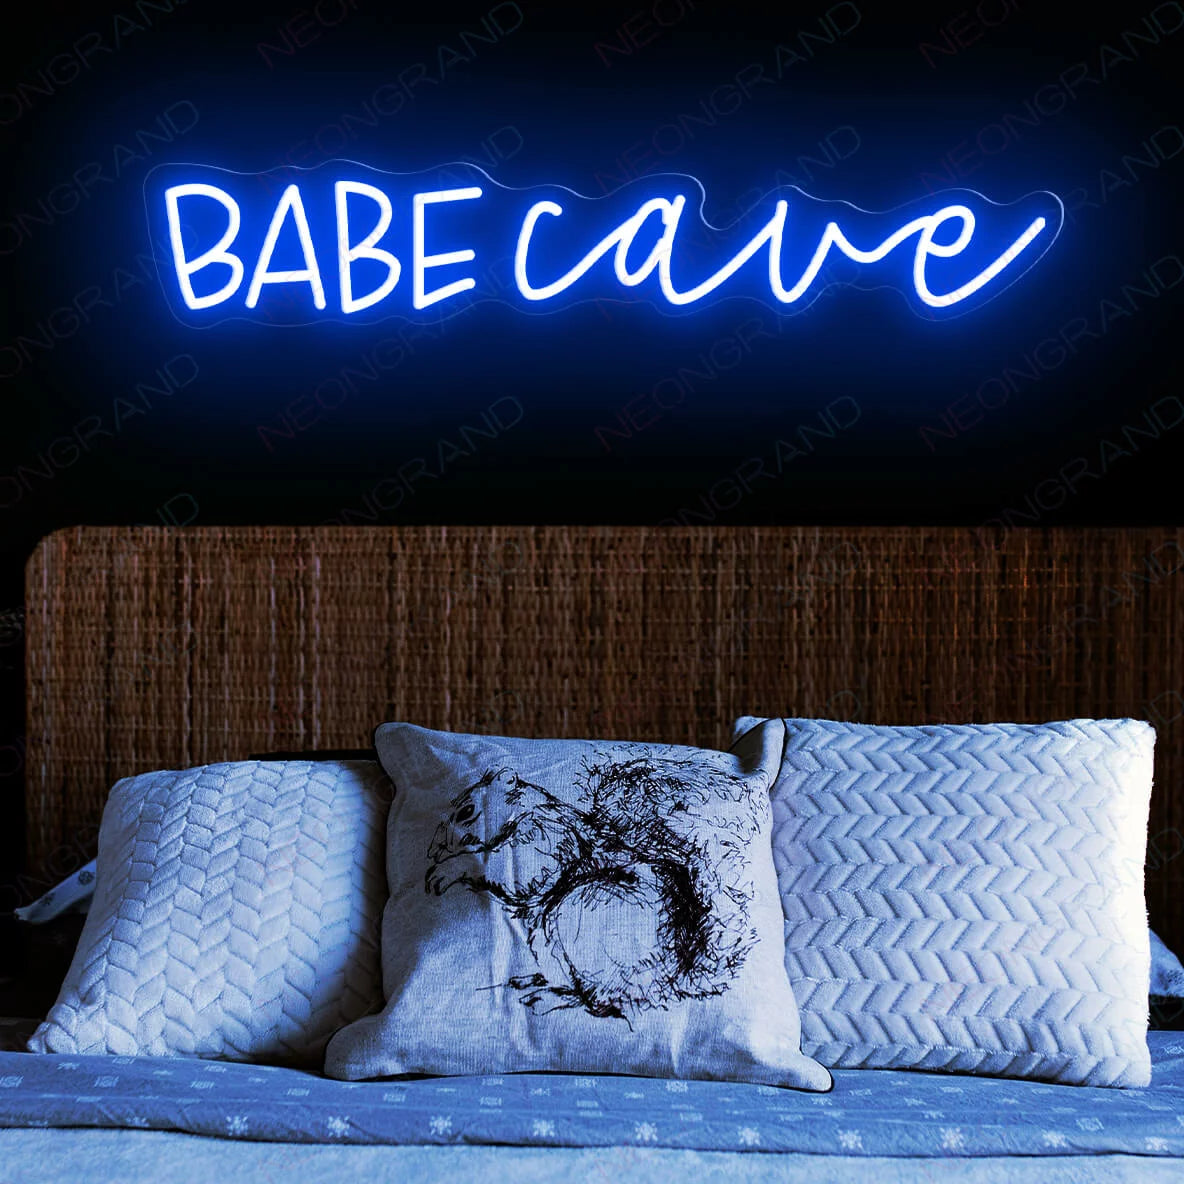 Babe Cave Neon Sign Bar Led Light blue